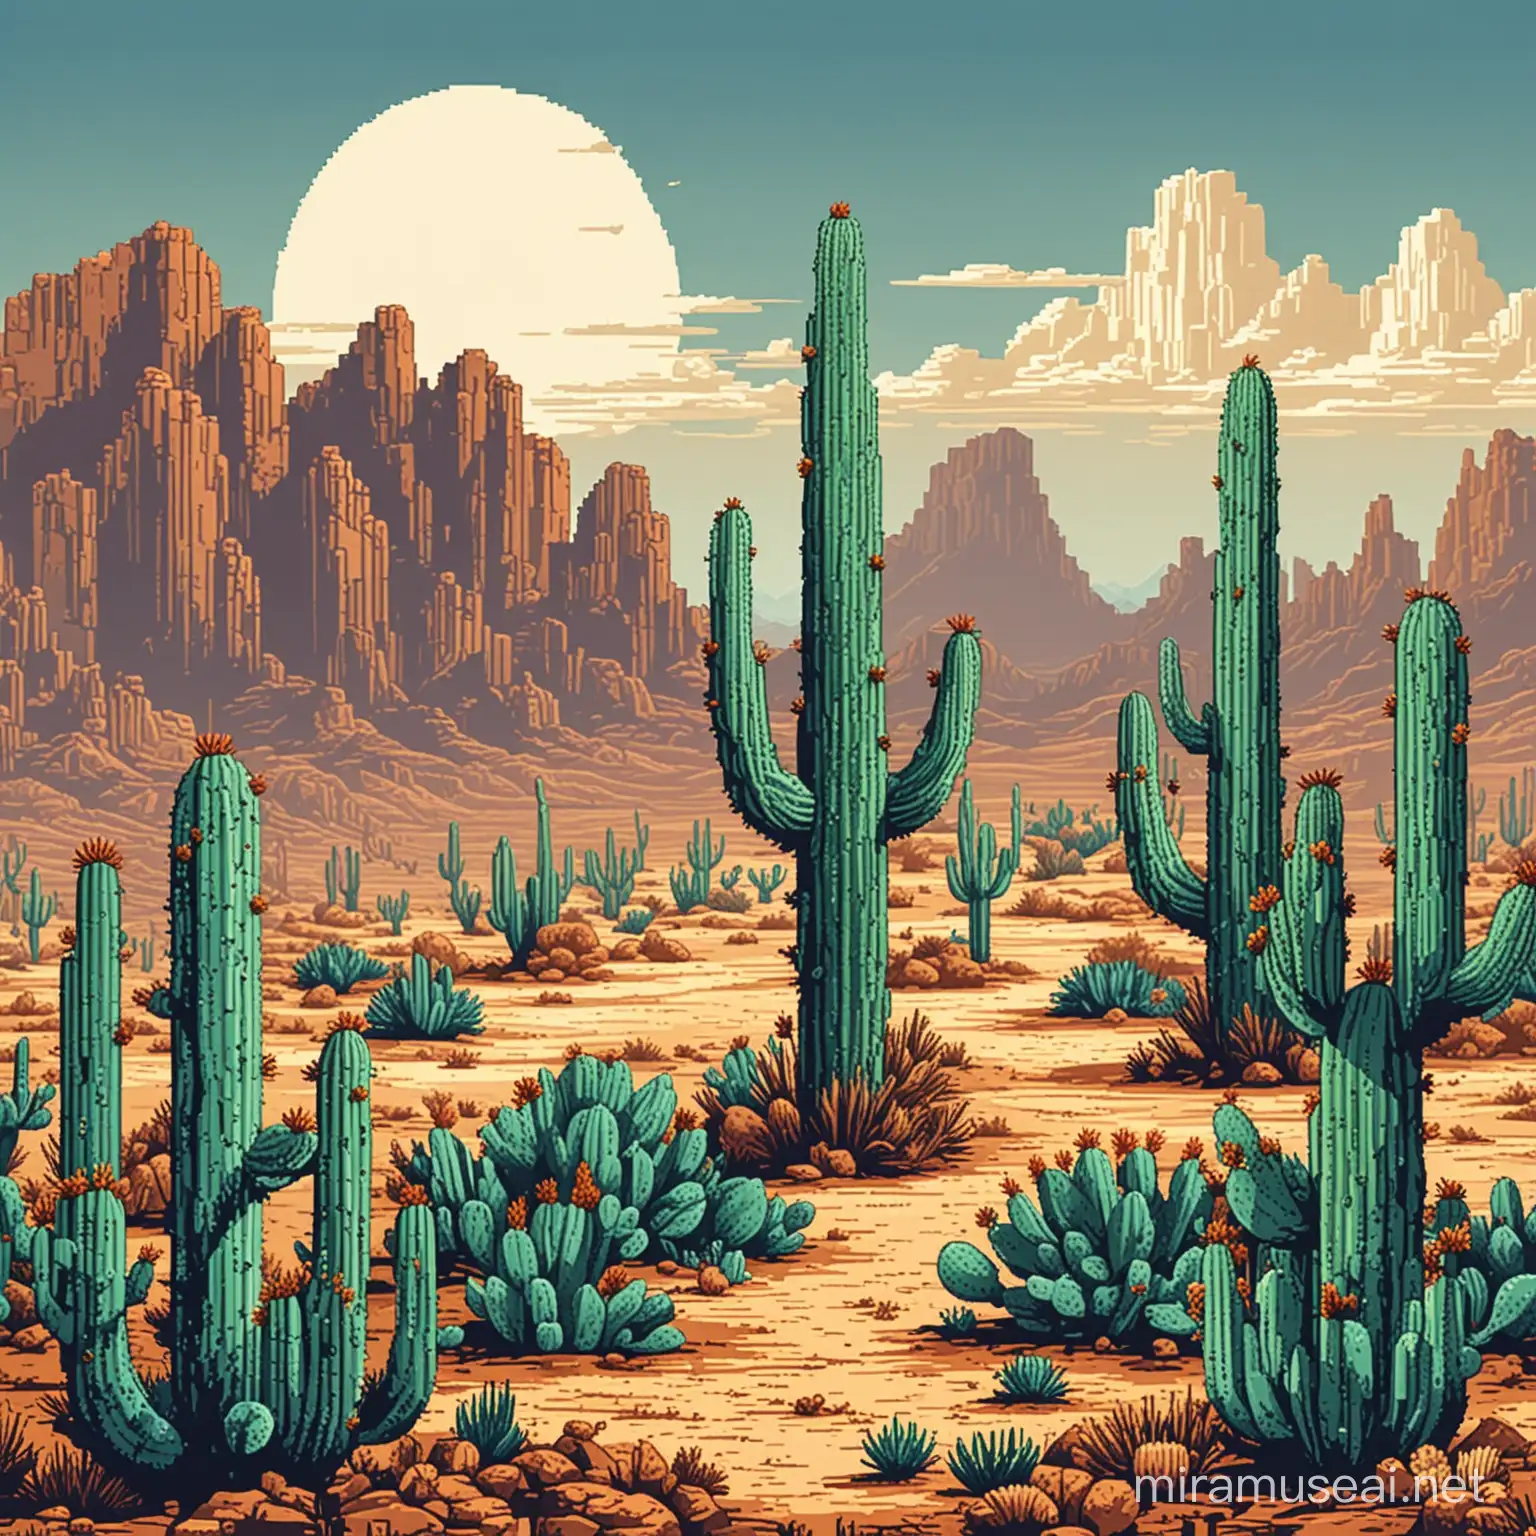 8bit pixel art of a desert landscape with cactus blue brown green